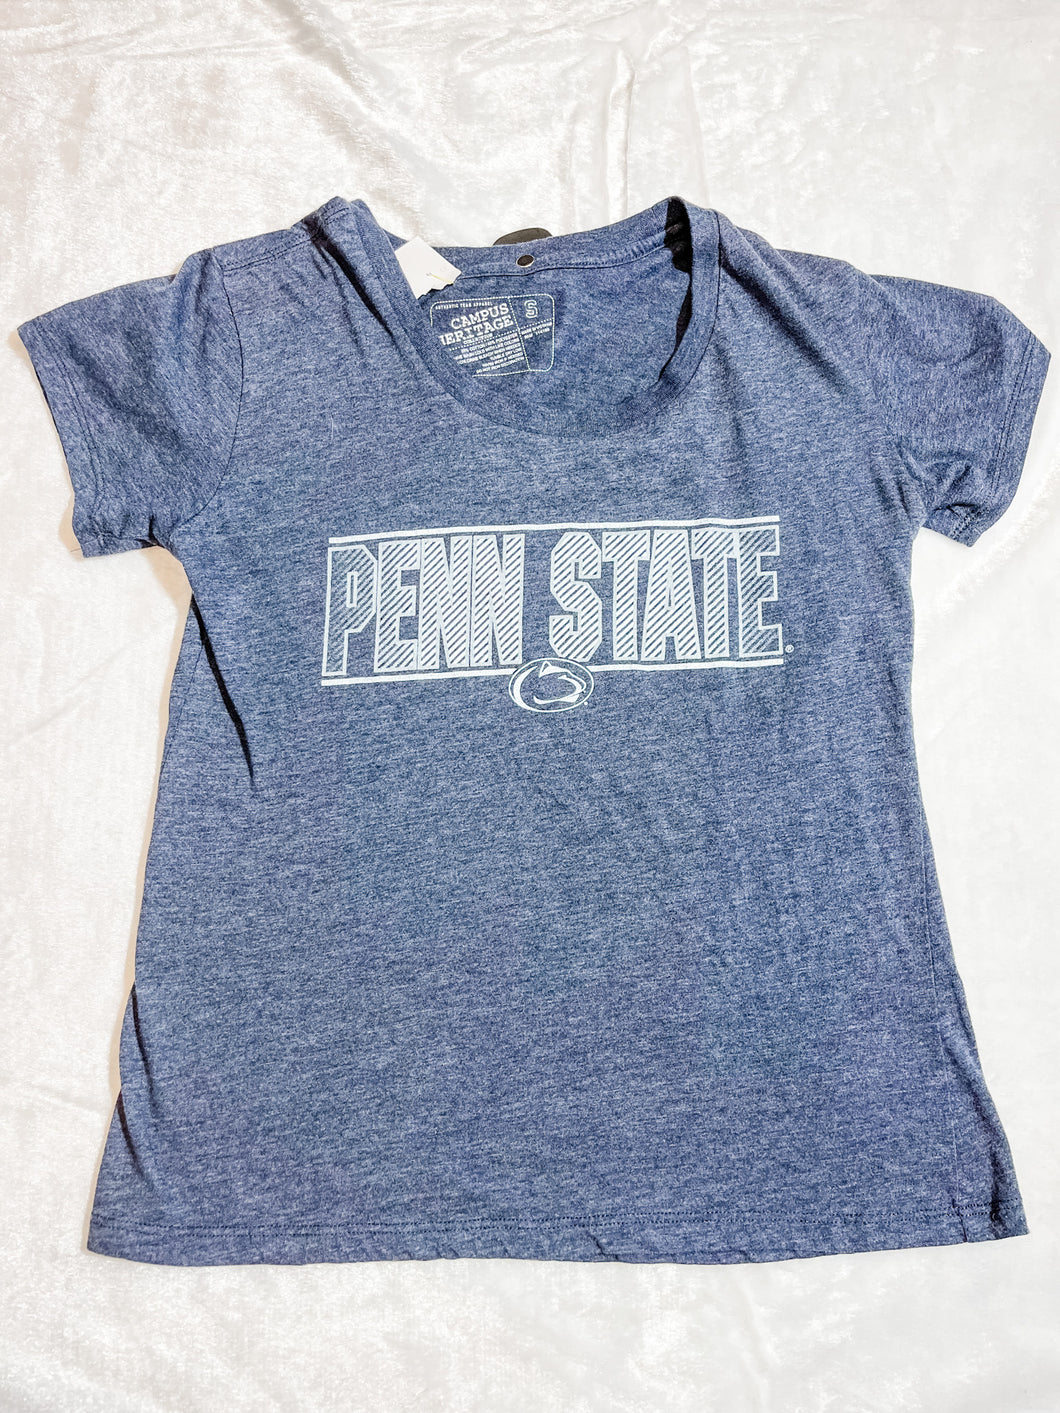 Campus Heritage T-Shirt Size Small * - Plato's Closet Bridgeville, PA